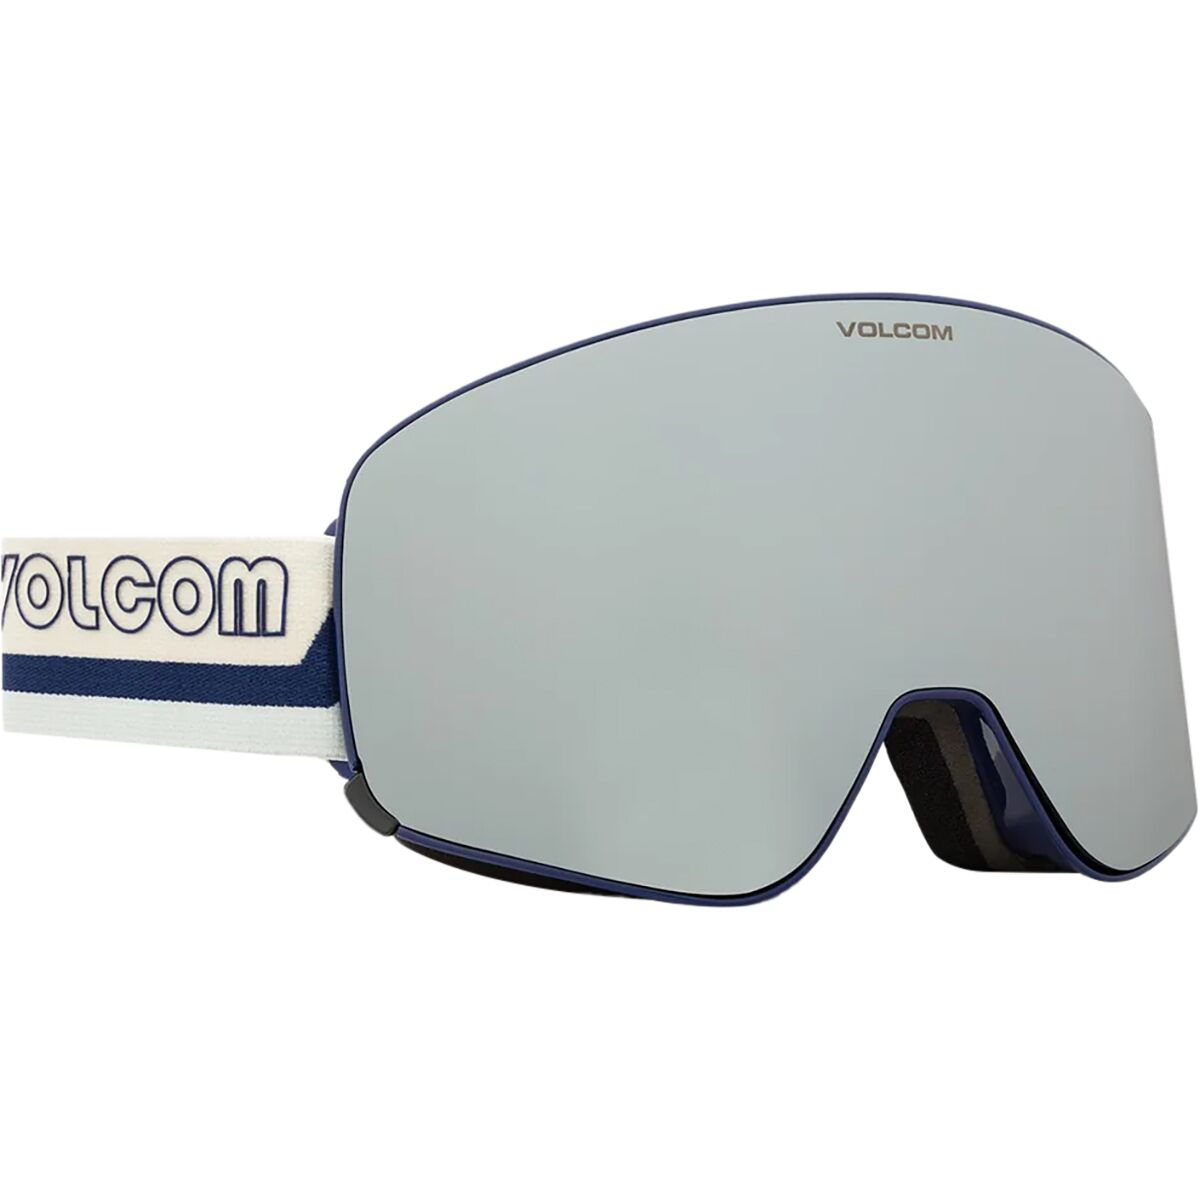 Volcom Odyssey Goggles